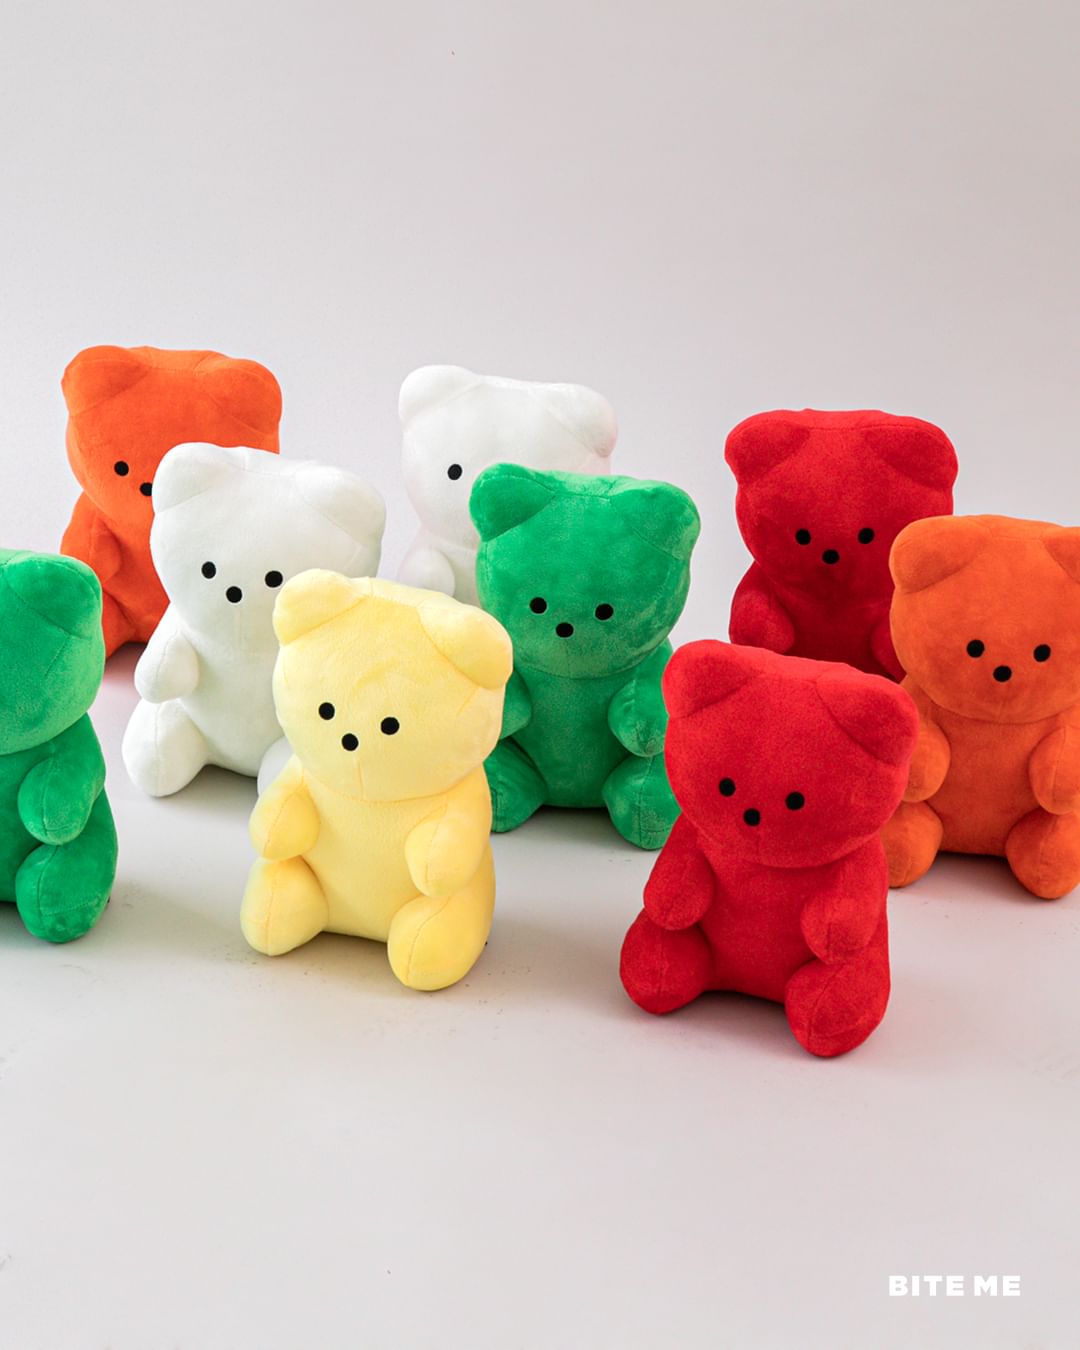 Bite Me - Giant Haribo Gummy Bear Dog Toy - Henlo Pets